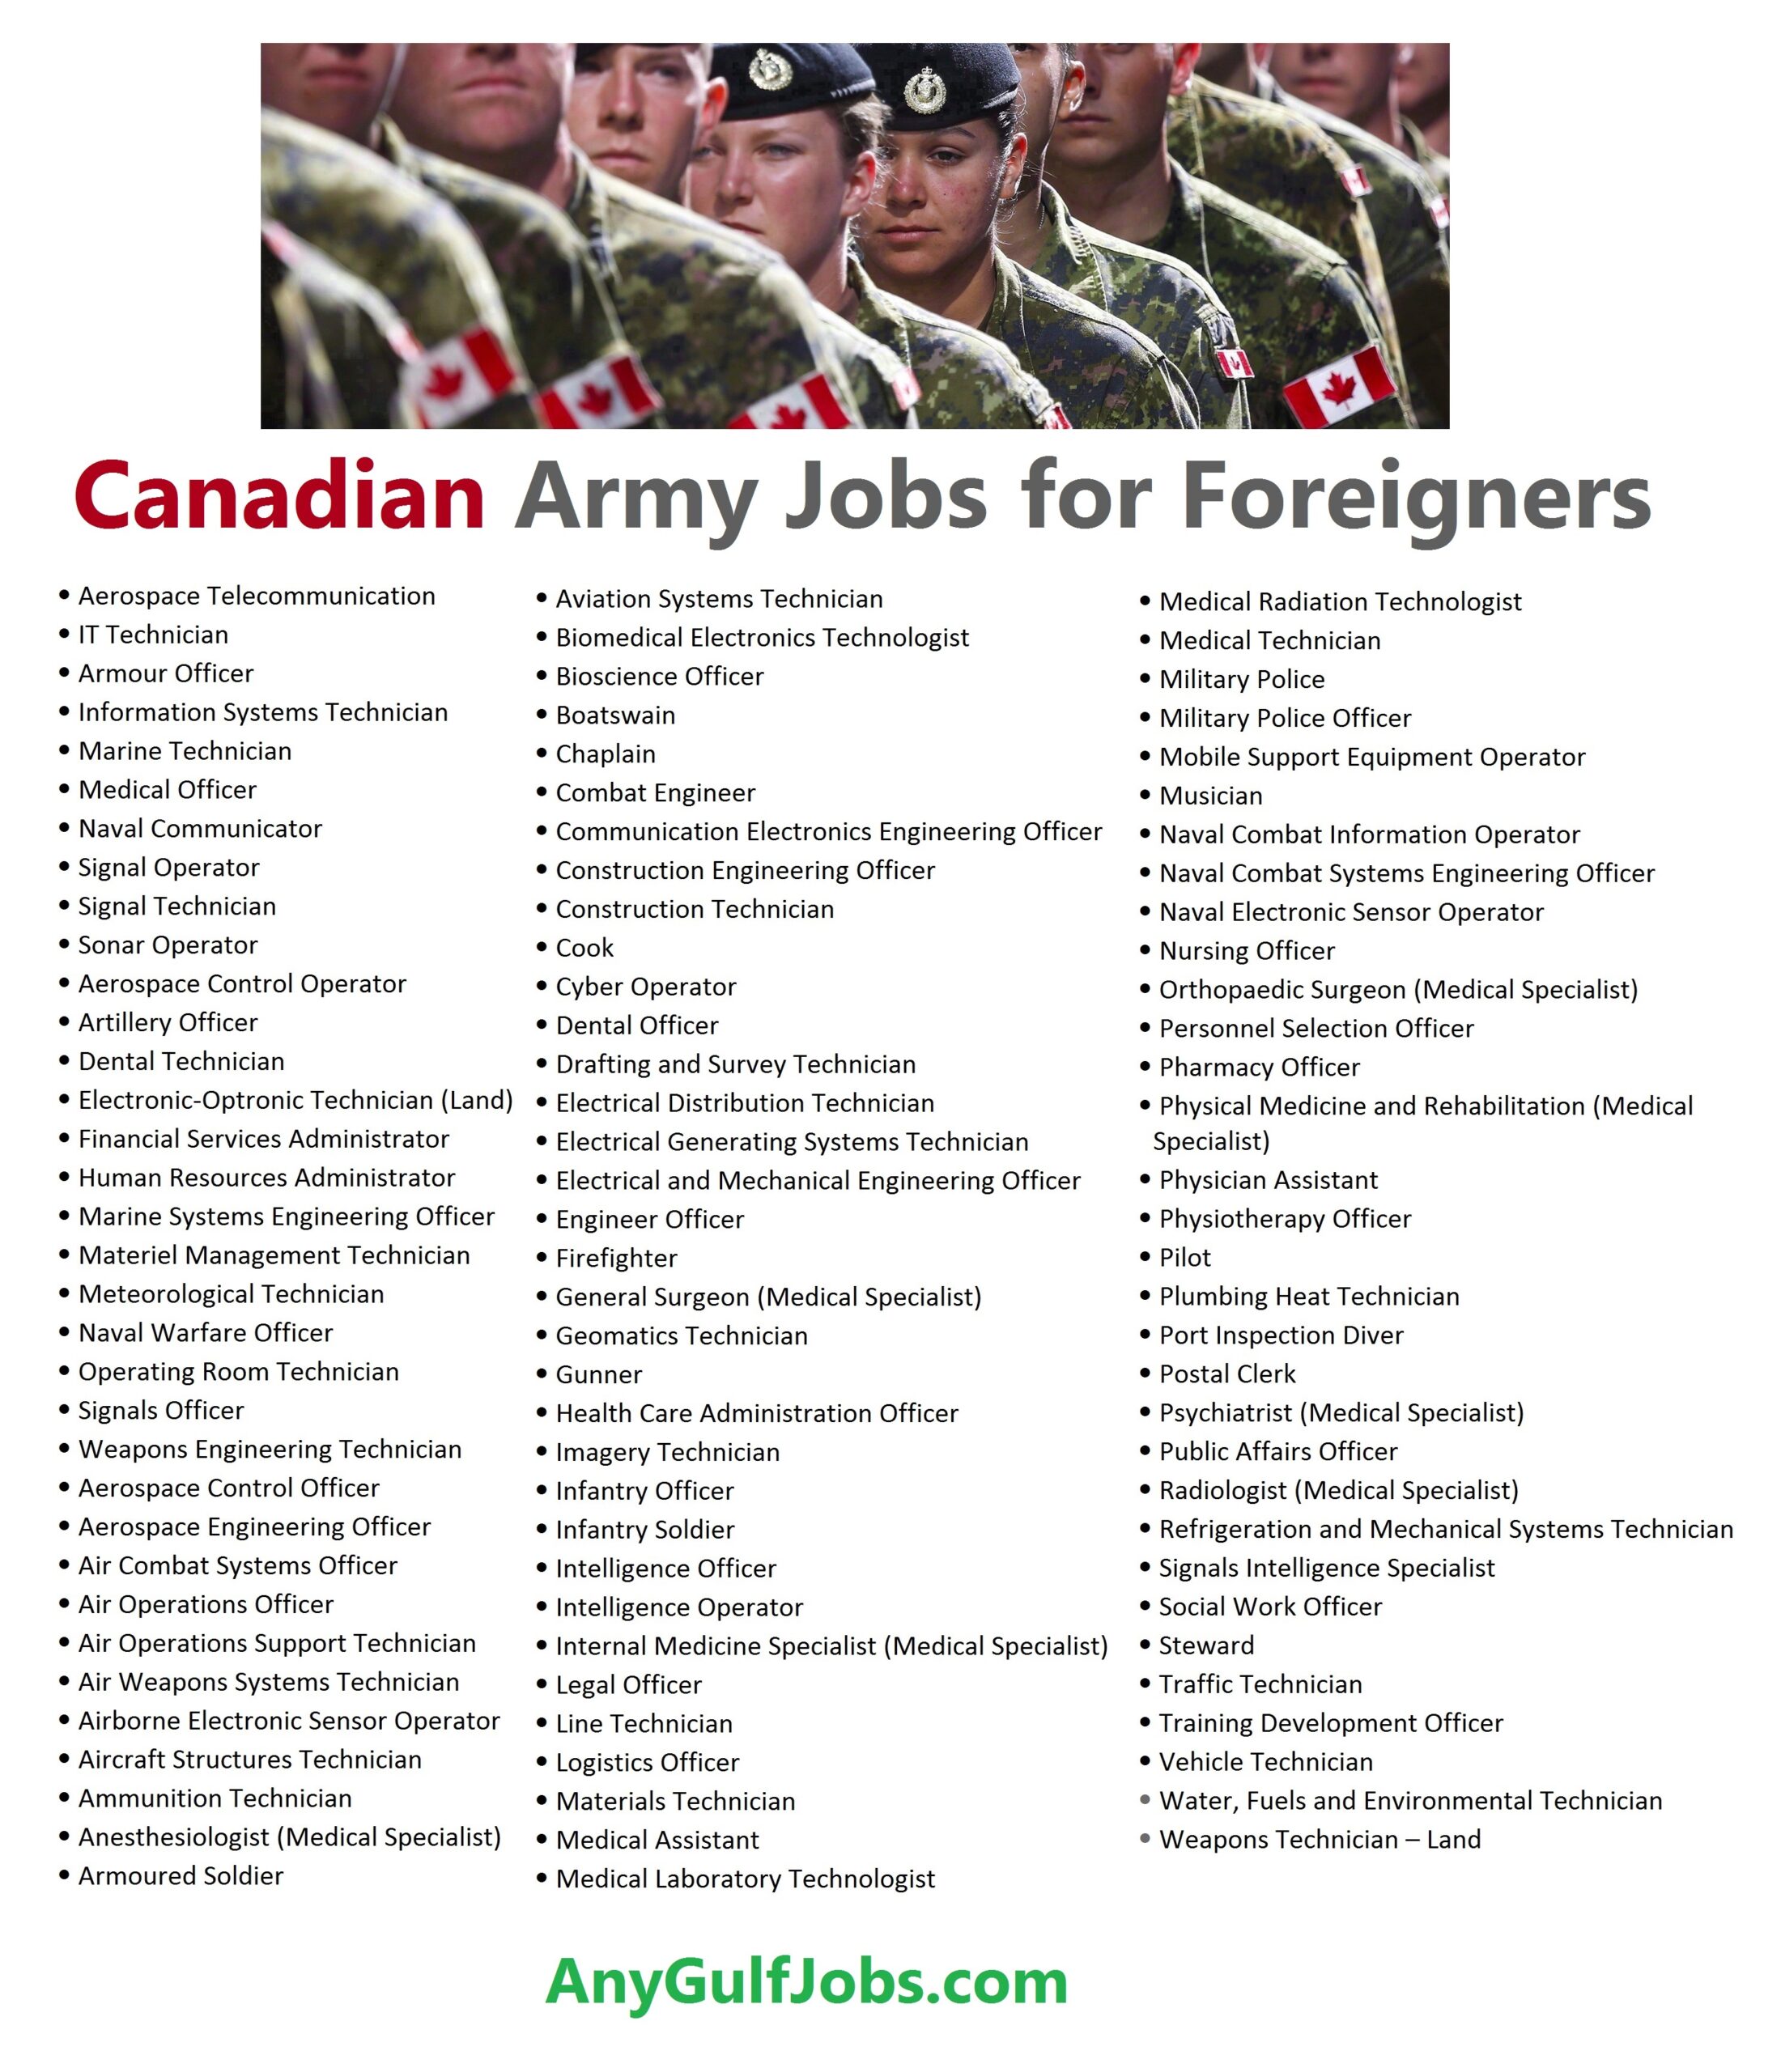 Canadian Army job vacancies